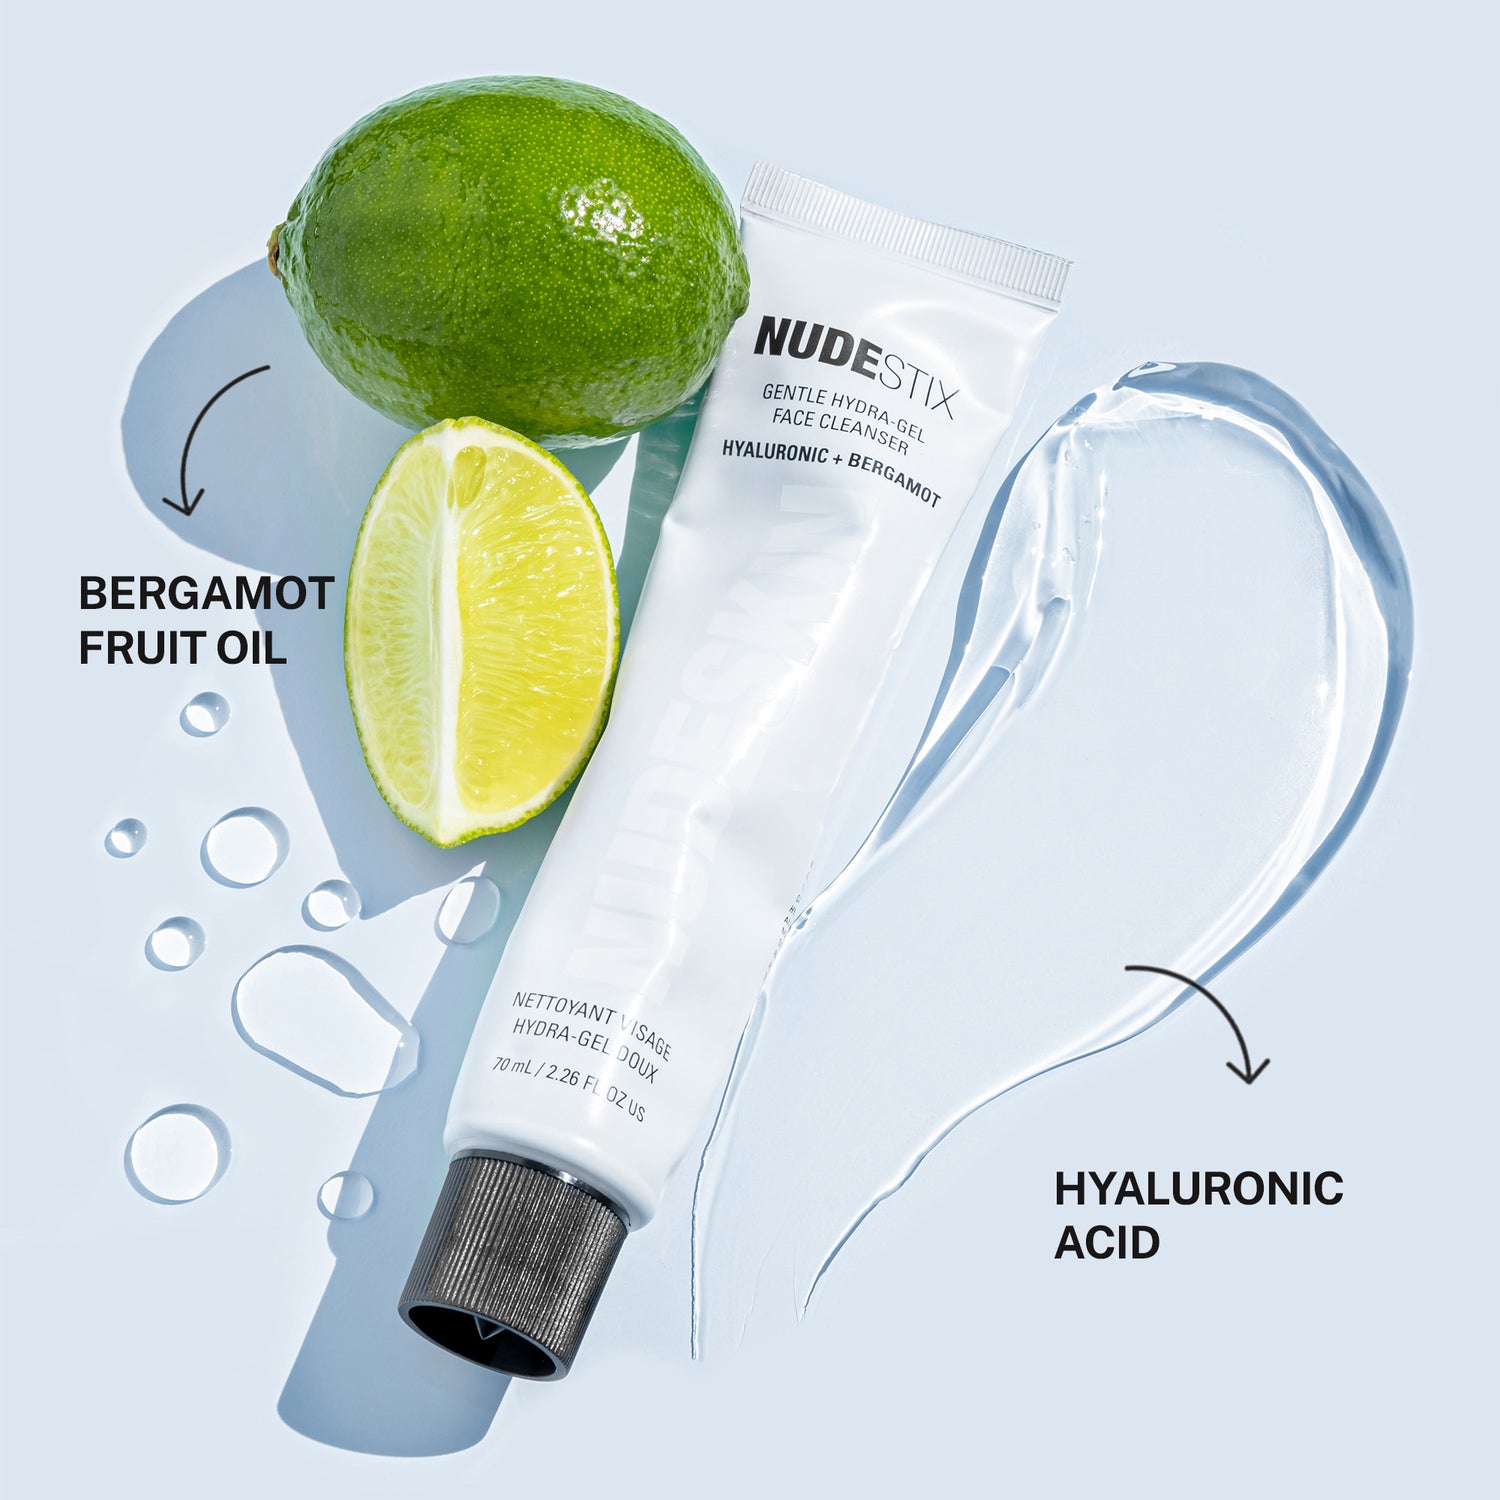 Water-based Gel Cleanser, Gentle Hydra-Gel Face Cleanser